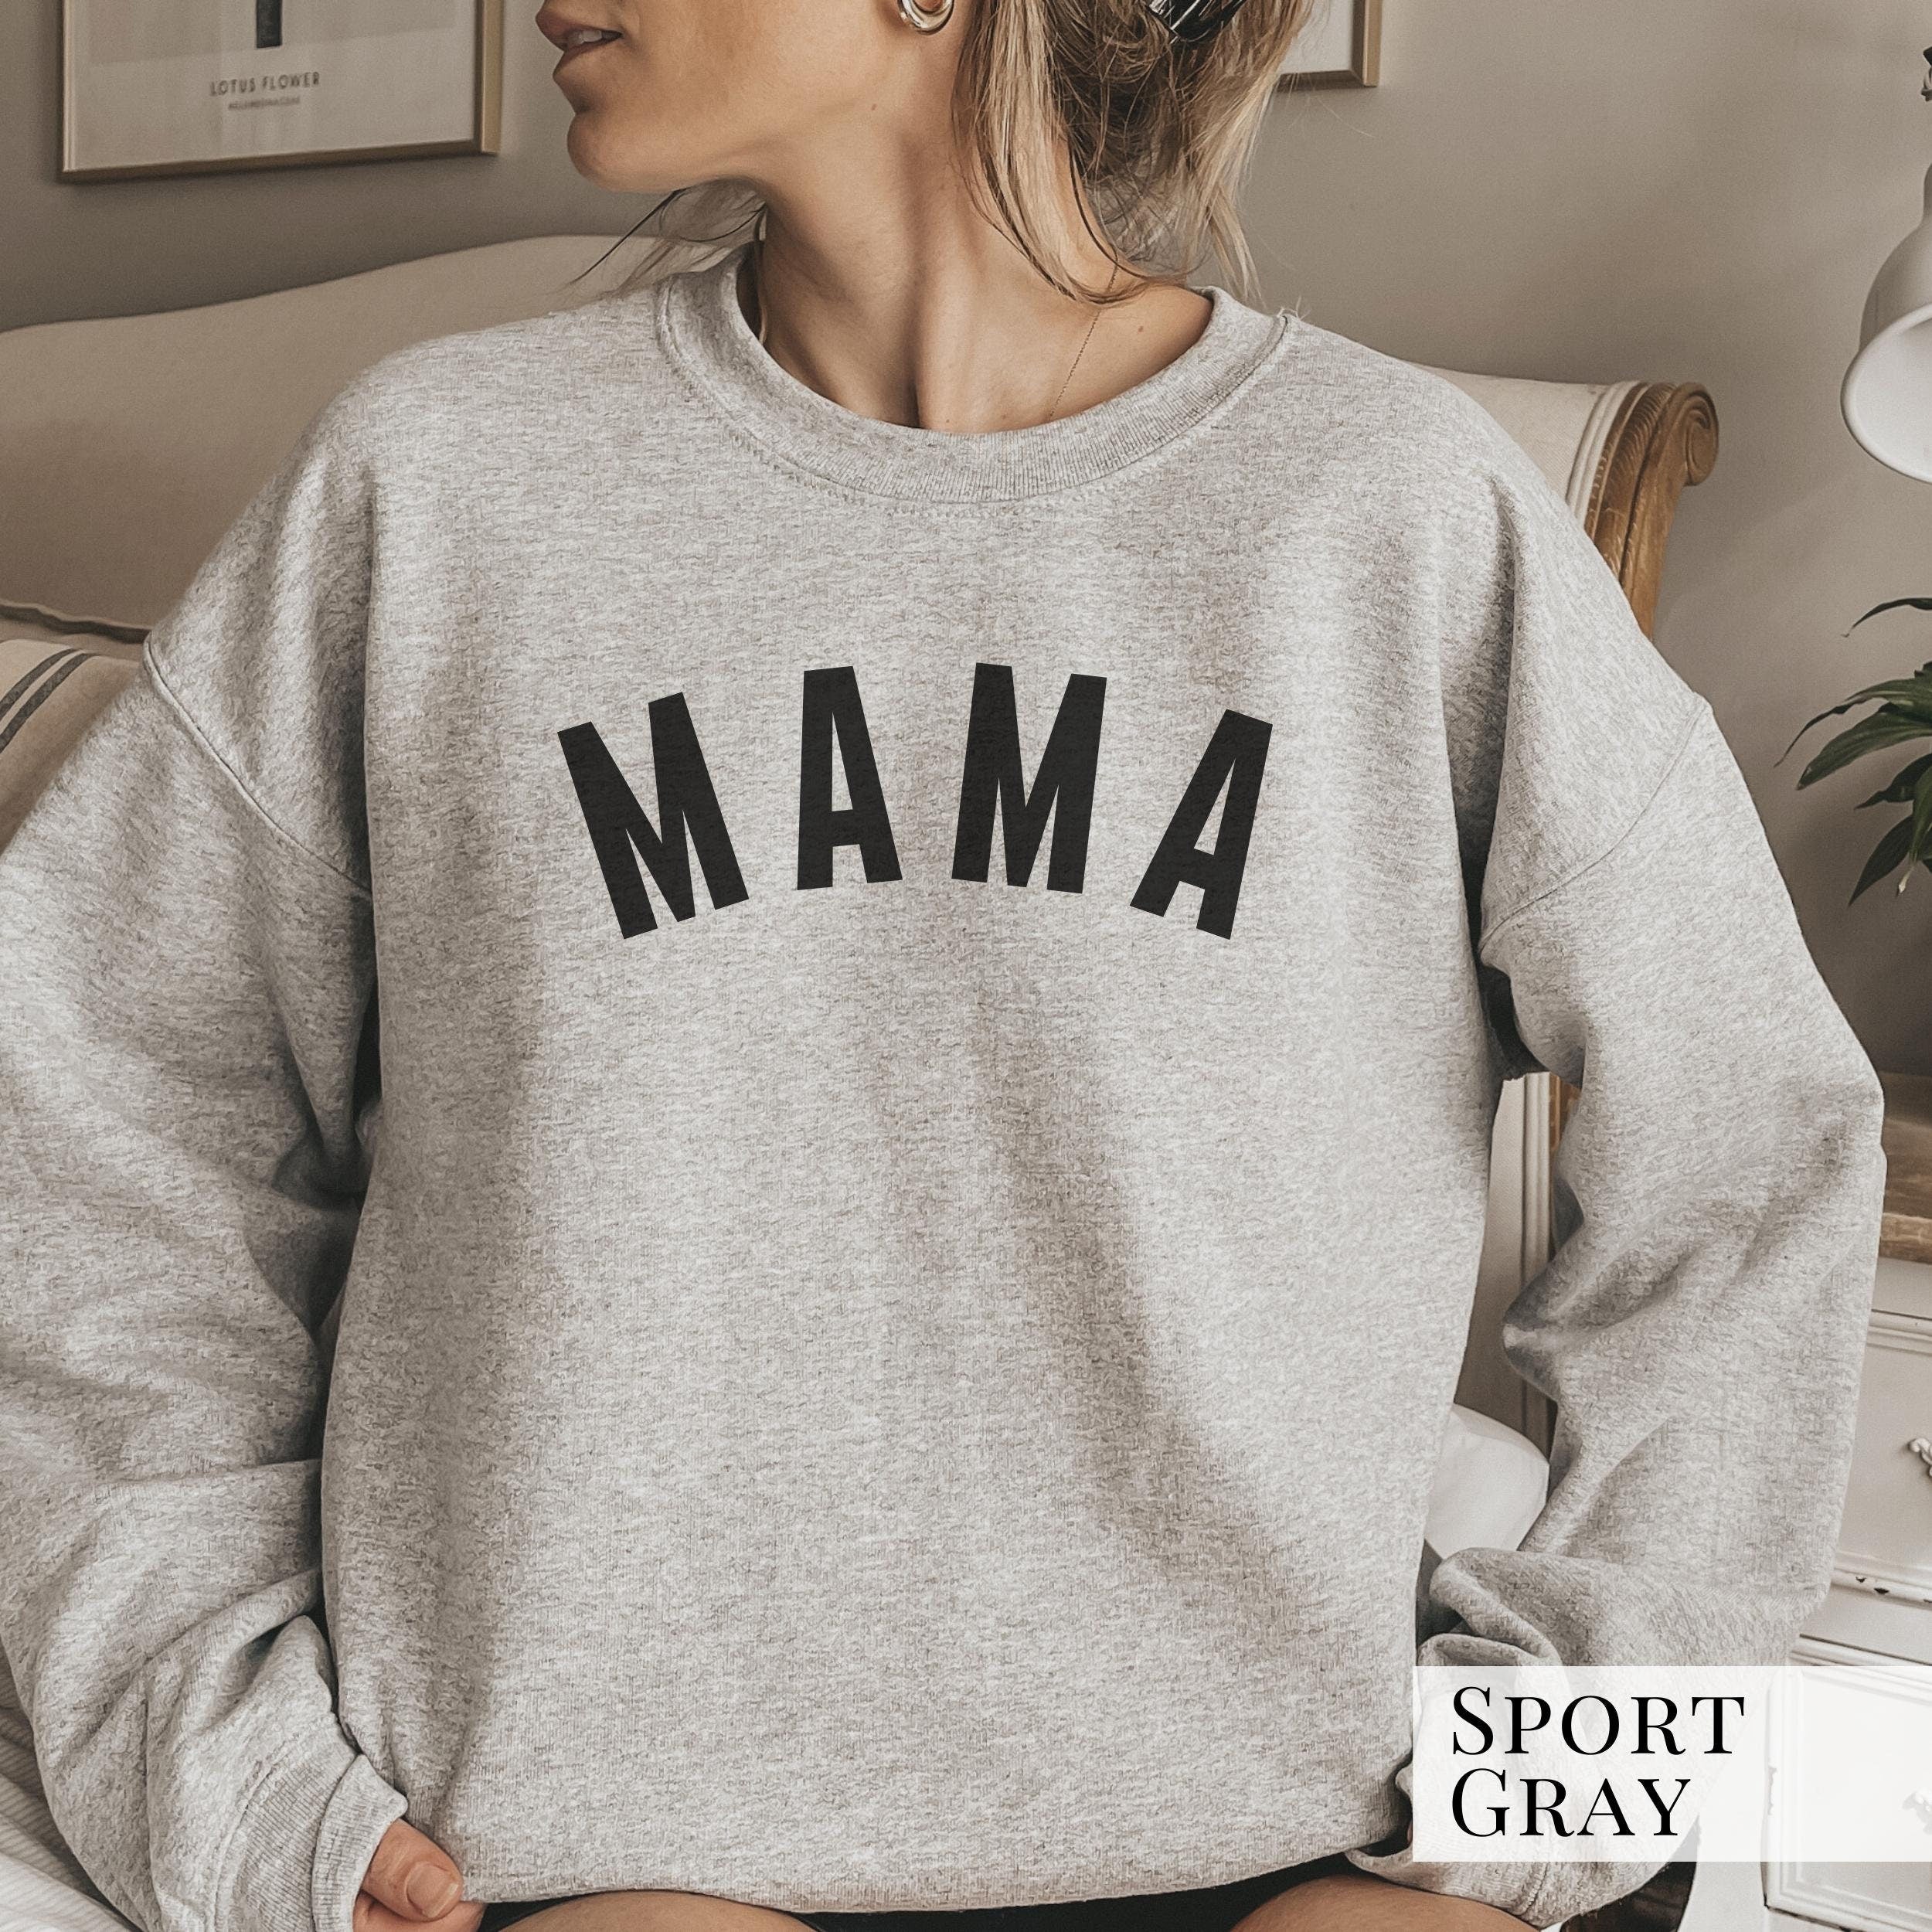 Mama Arched Sweatshirt